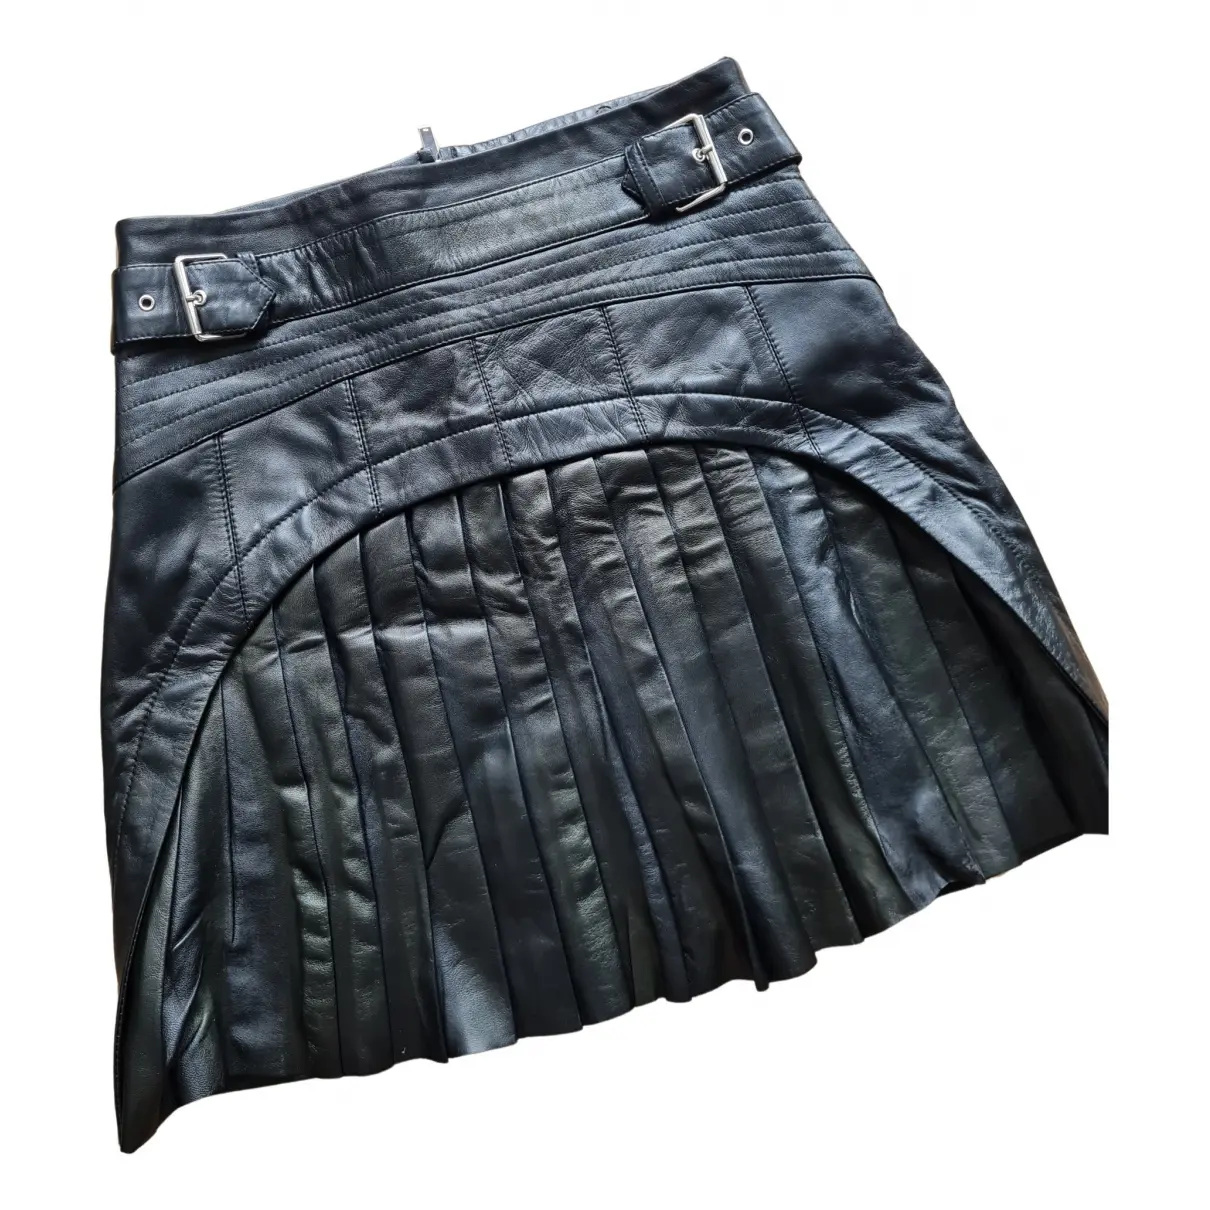 Leather skirt Karen Millen